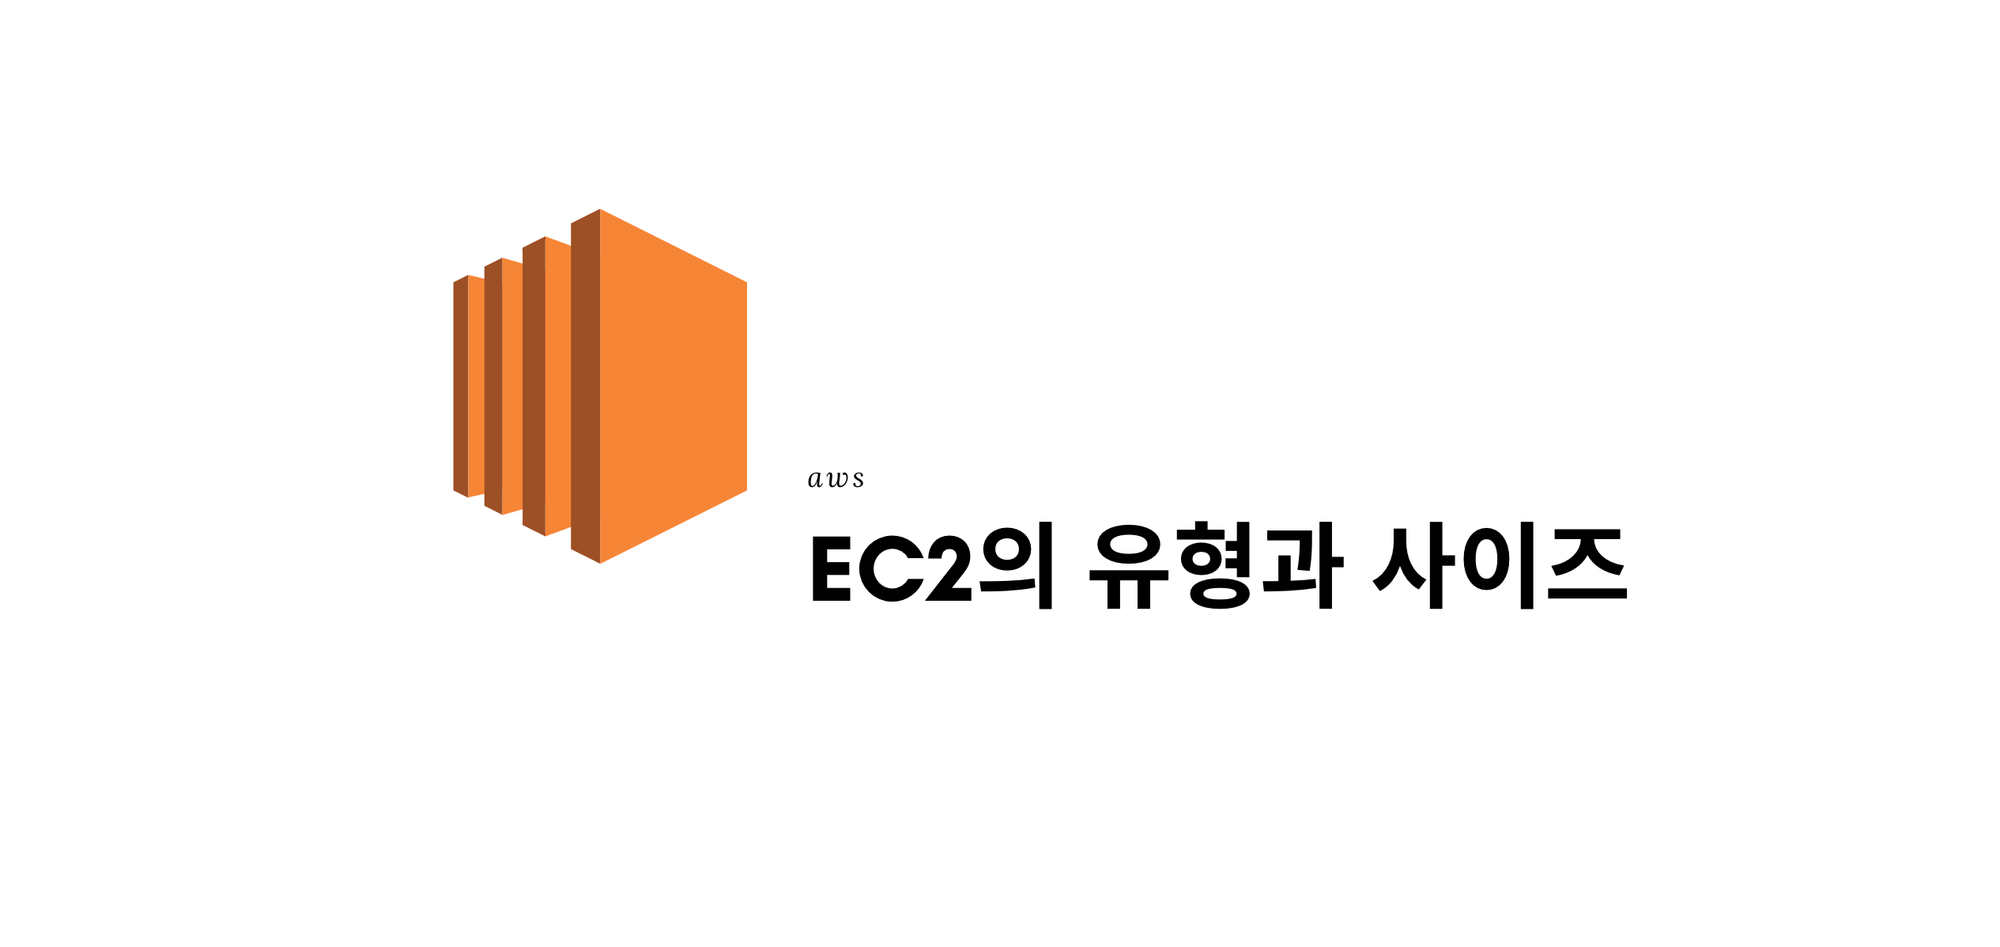 EC2 기초(3): EC2의 유형과 사이즈aws_introduction[8]